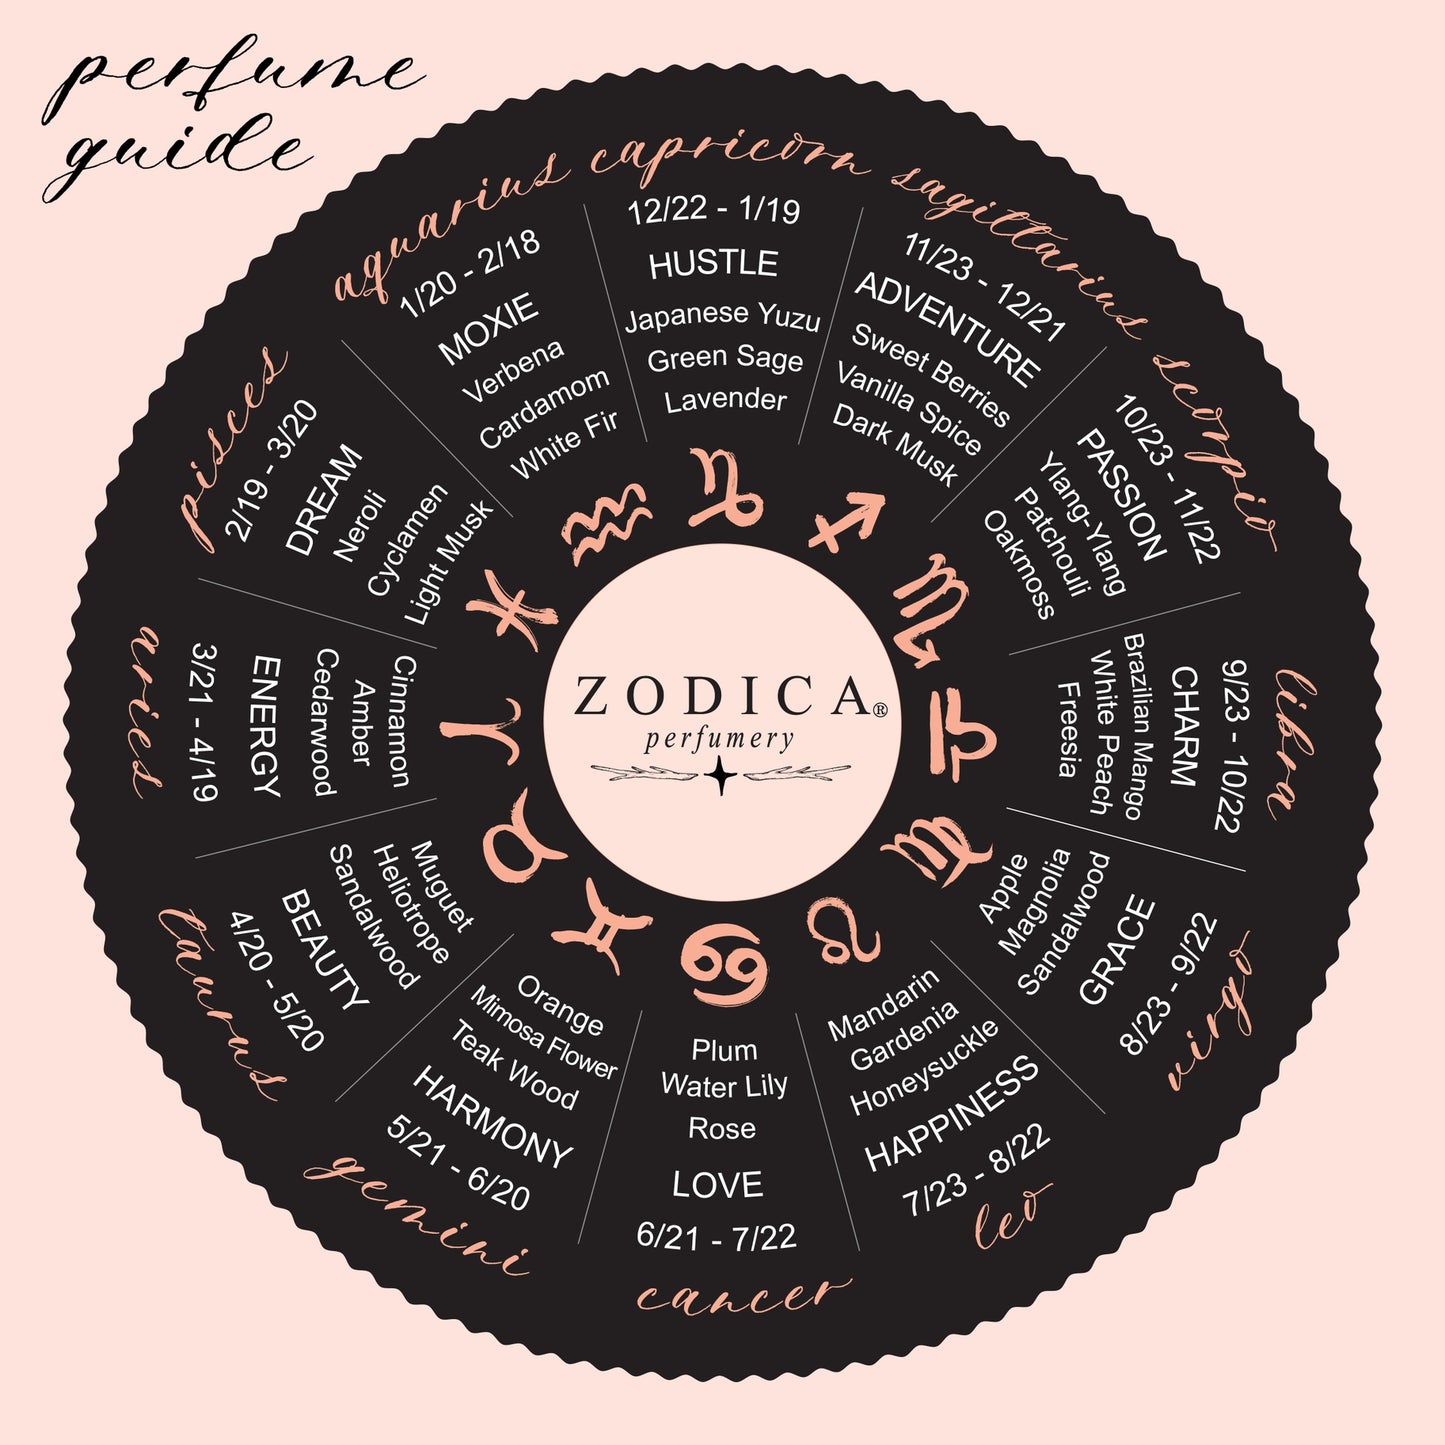 Zodiac perfume infused items